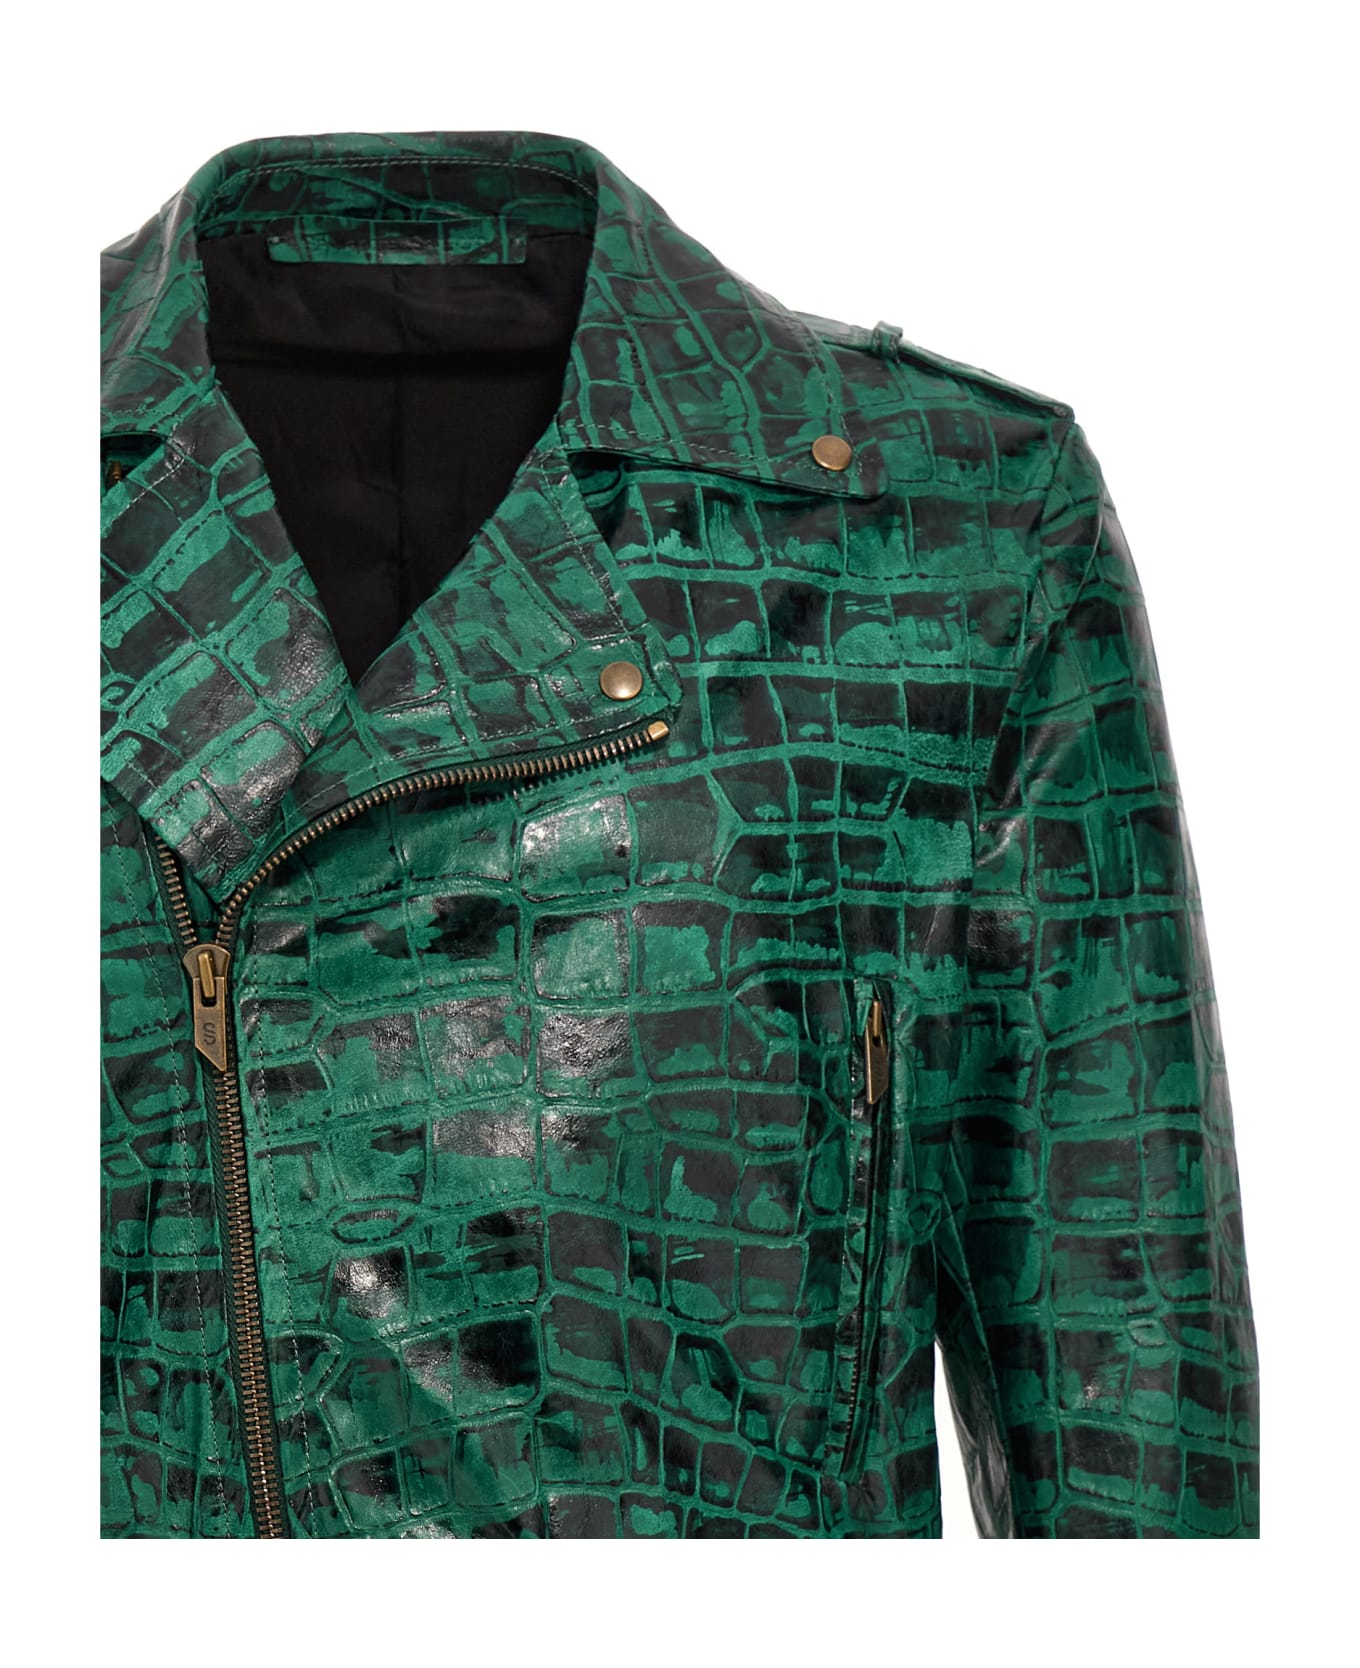 Salvatore Santoro Croc Print Leather Jacket - Green